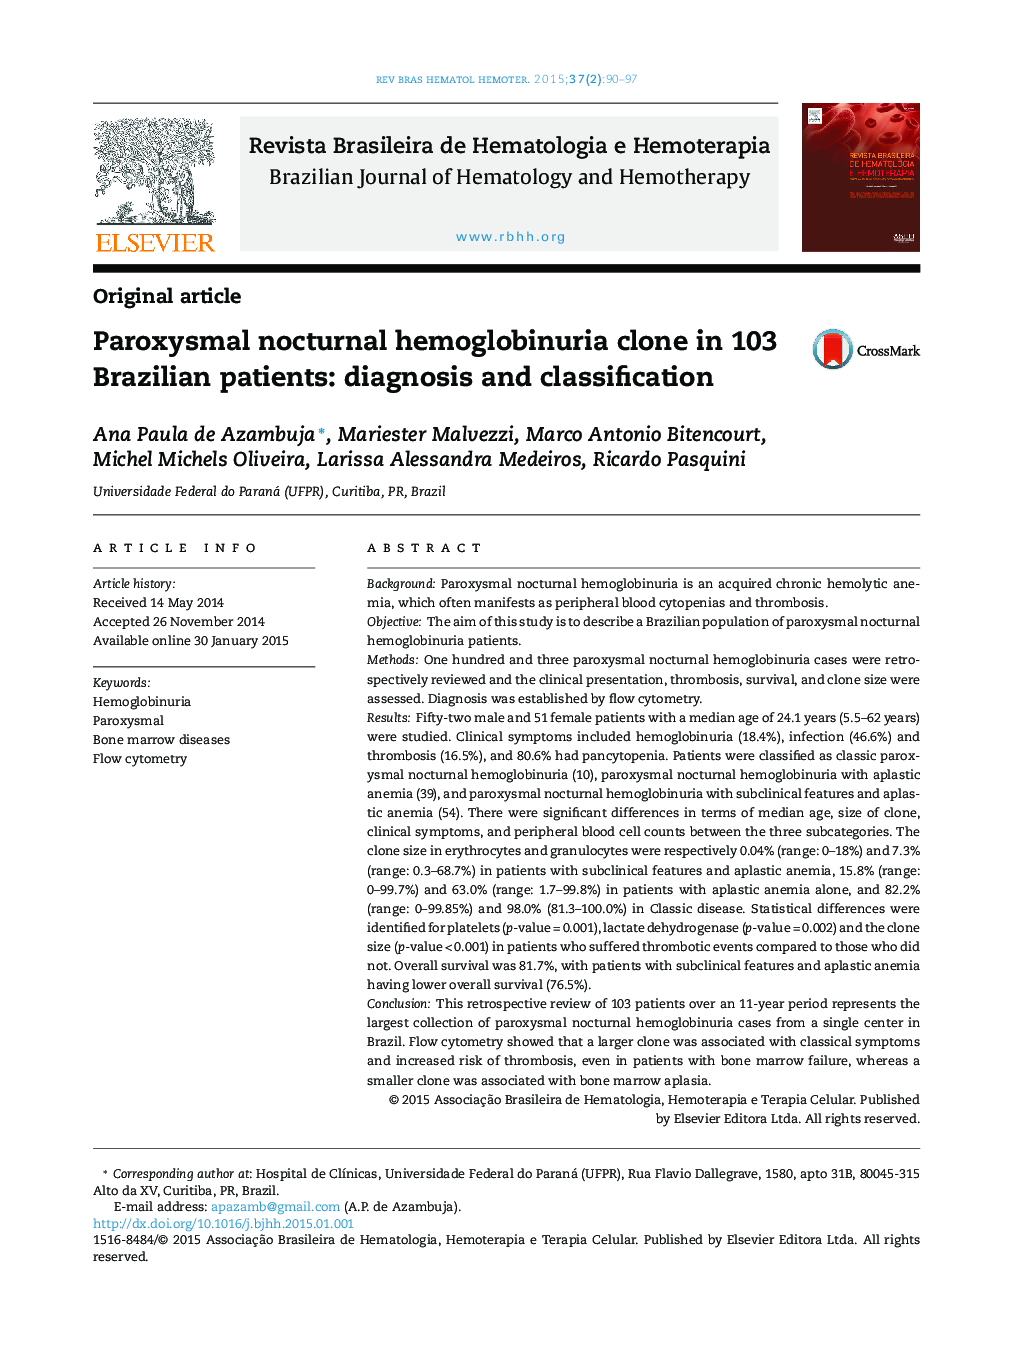 Paroxysmal nocturnal hemoglobinuria clone in 103 Brazilian patients: diagnosis and classification